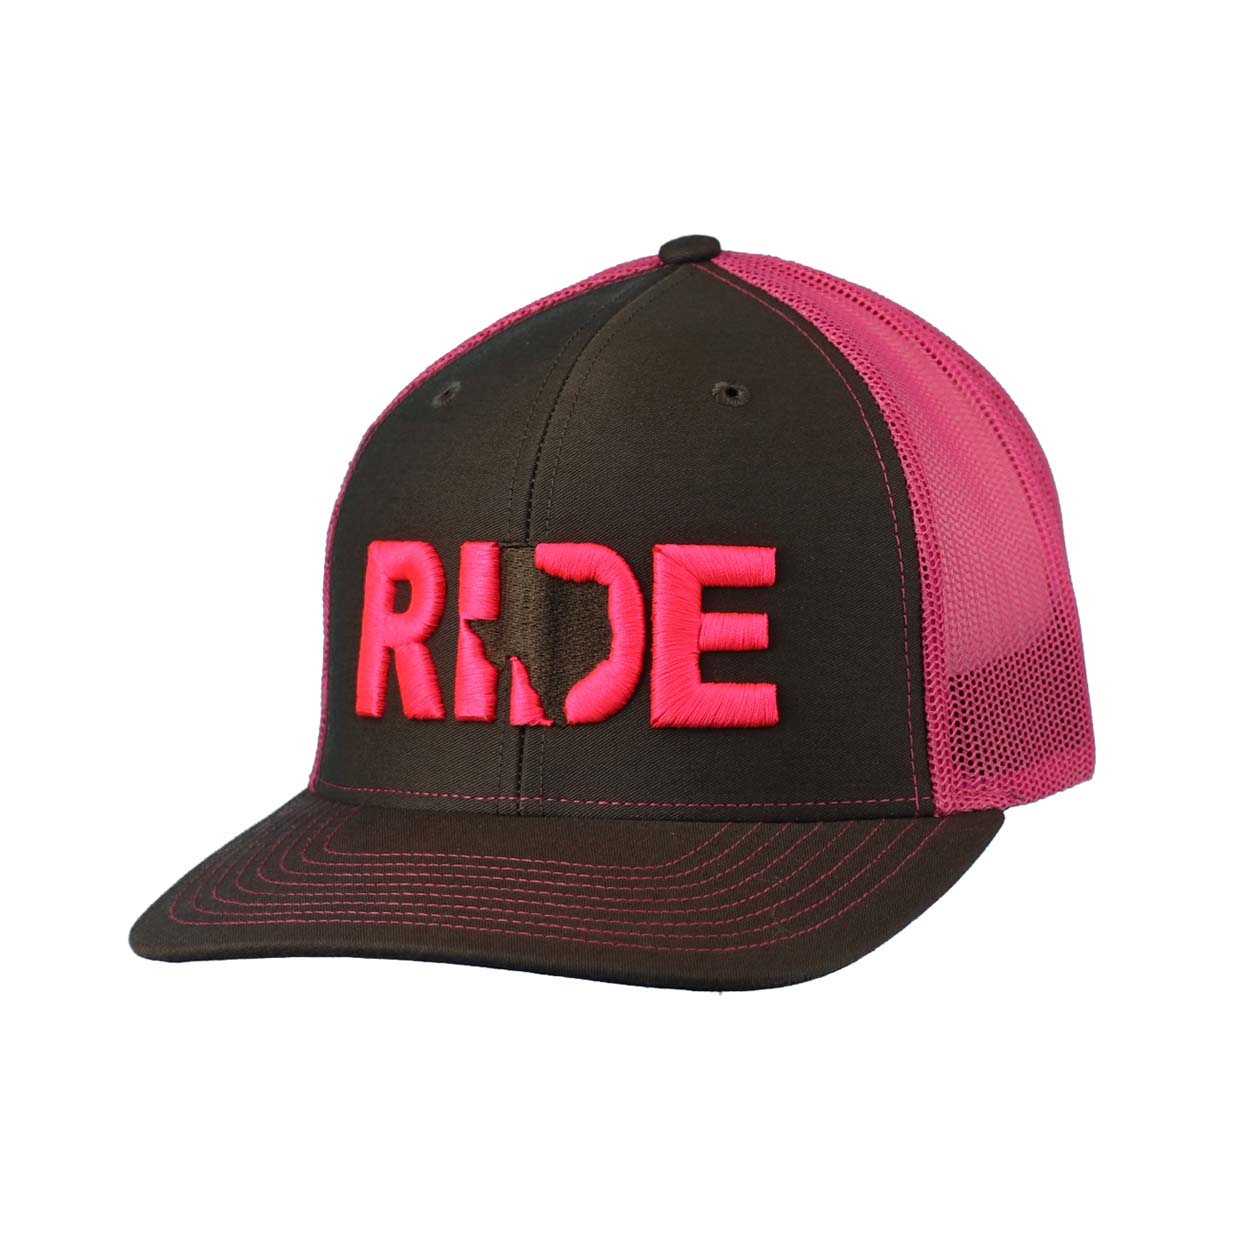 Ride Texas Classic Pro 3D Puff Embroidered Snapback Trucker Hat Gray/Fuschia